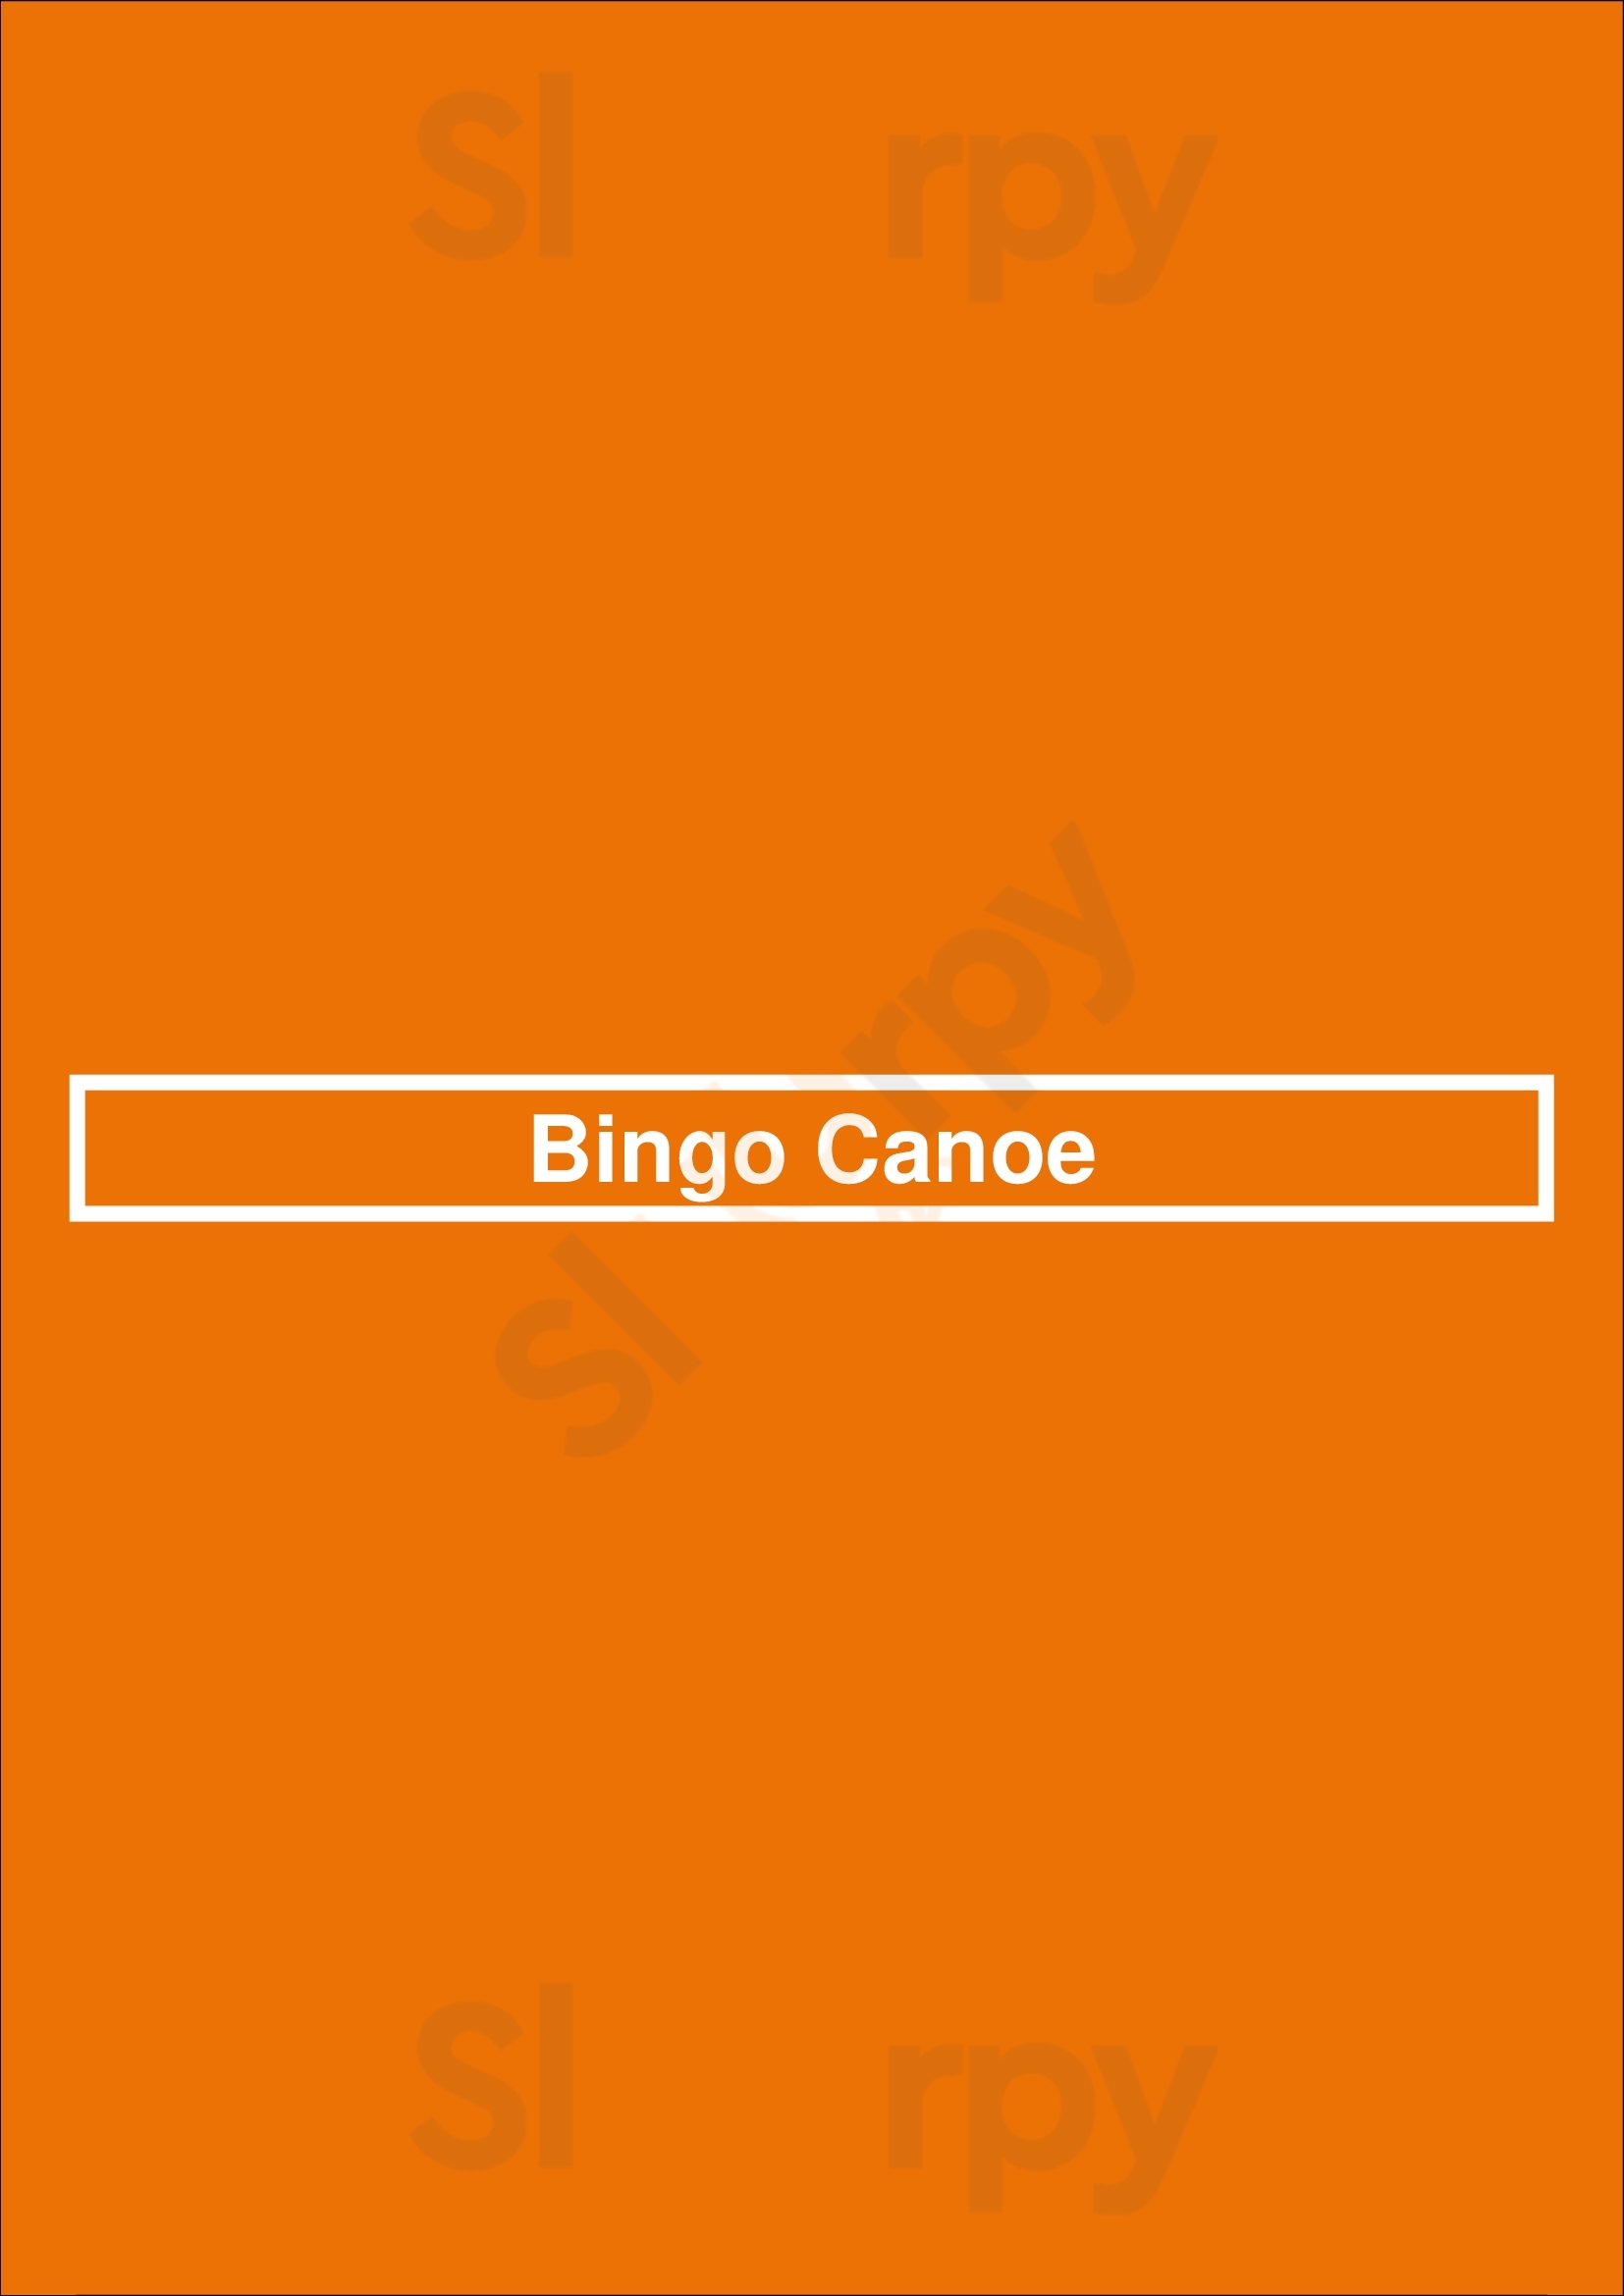 Bingo Canoe Madrid Menu - 1